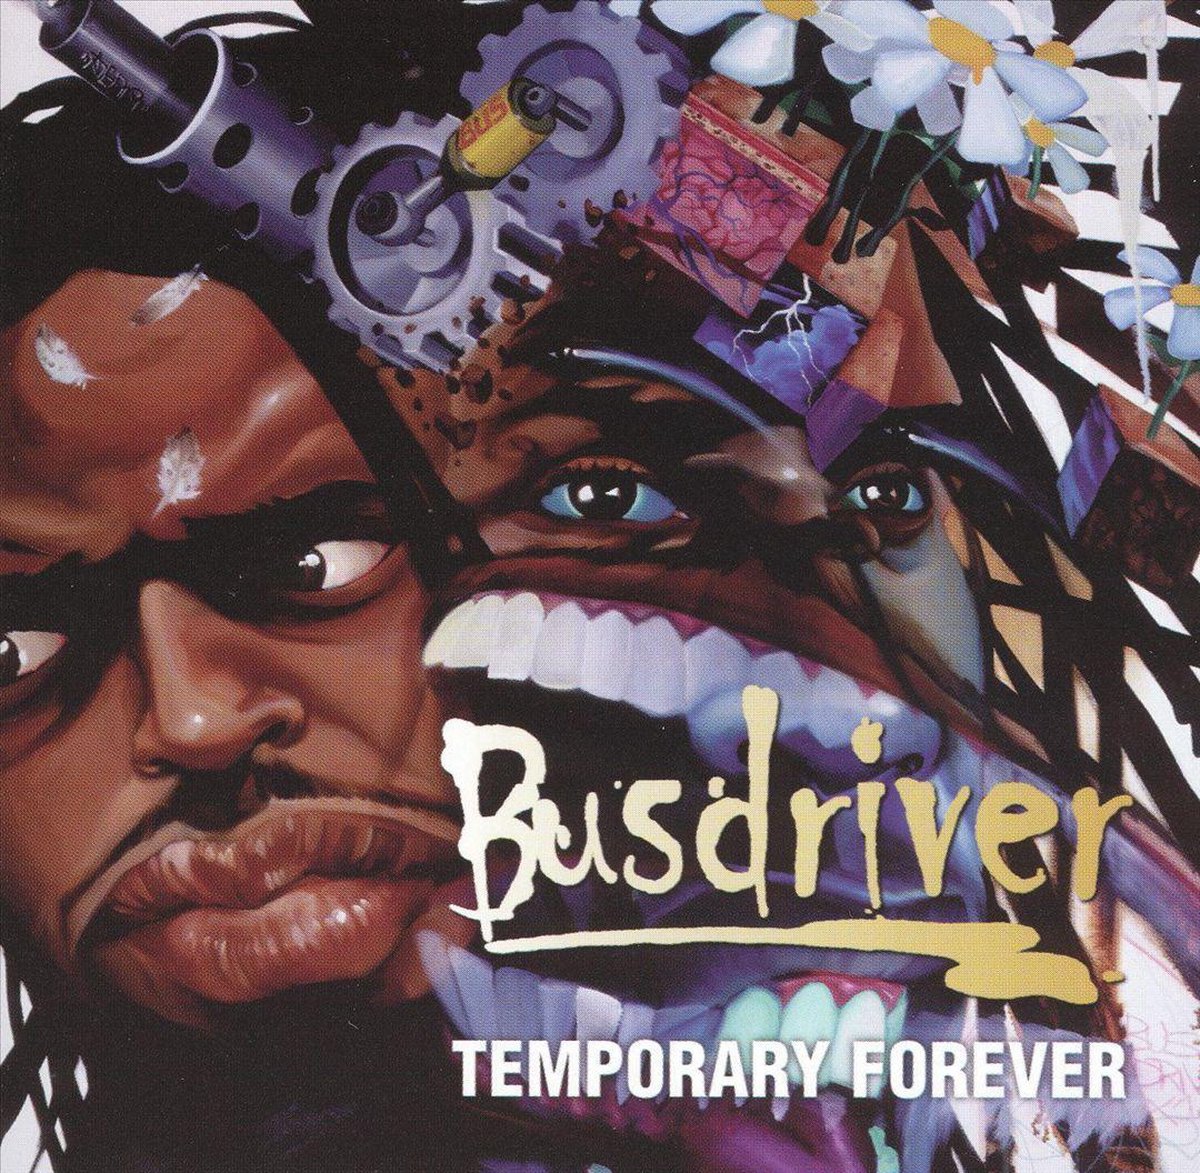 Temporary Forever - Busdriver